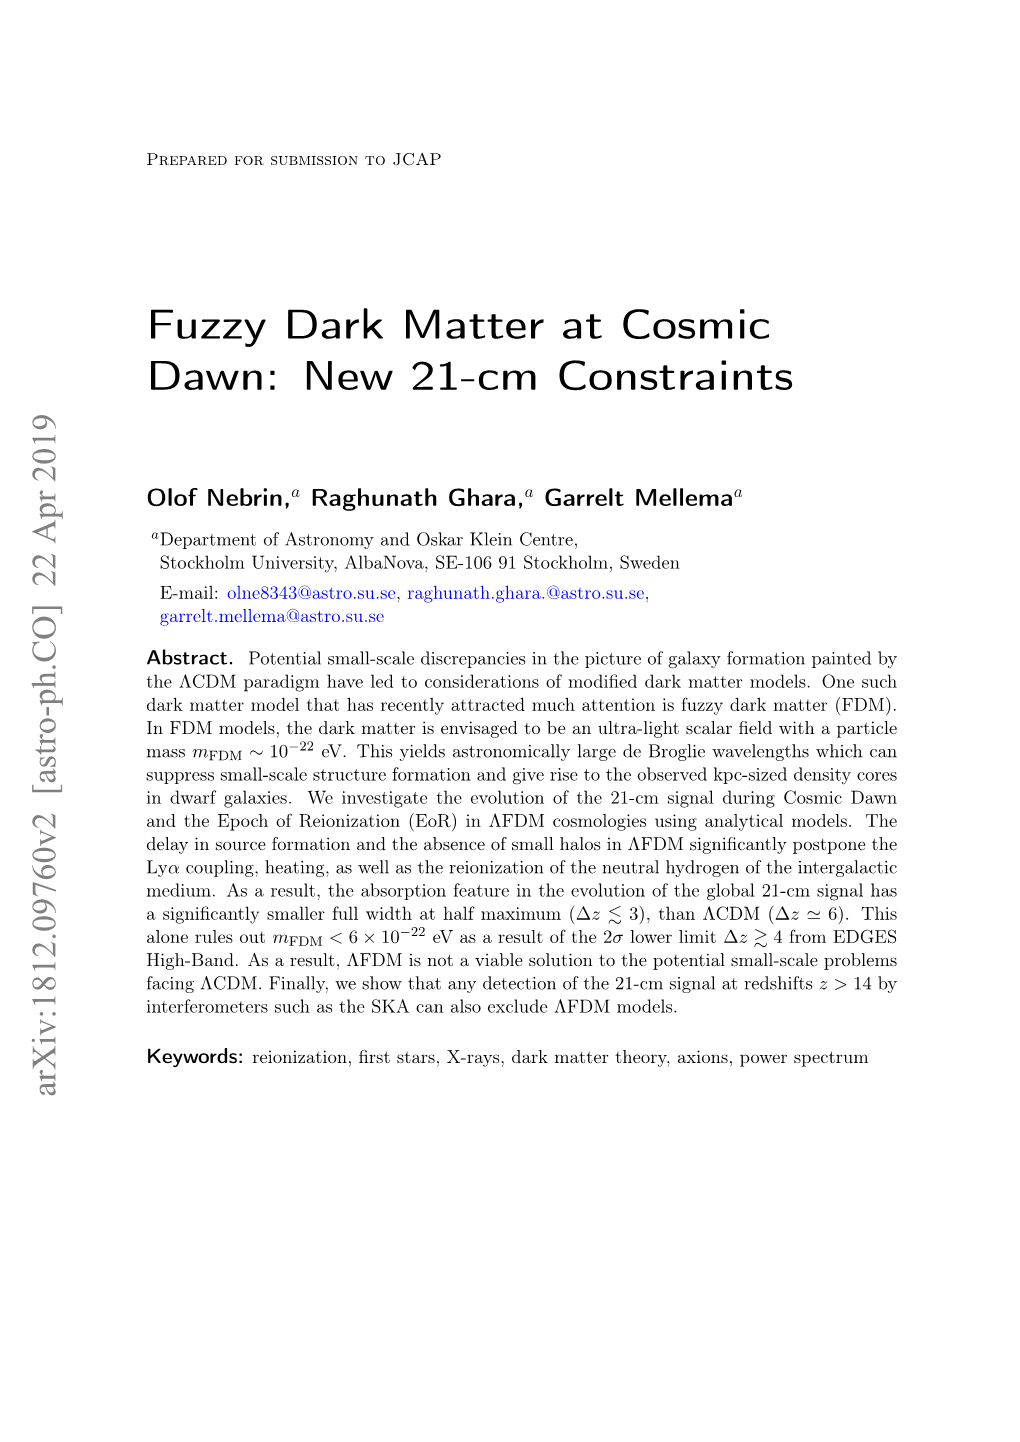 Fuzzy Dark Matter at Cosmic Dawn: New 21-Cm Constraints